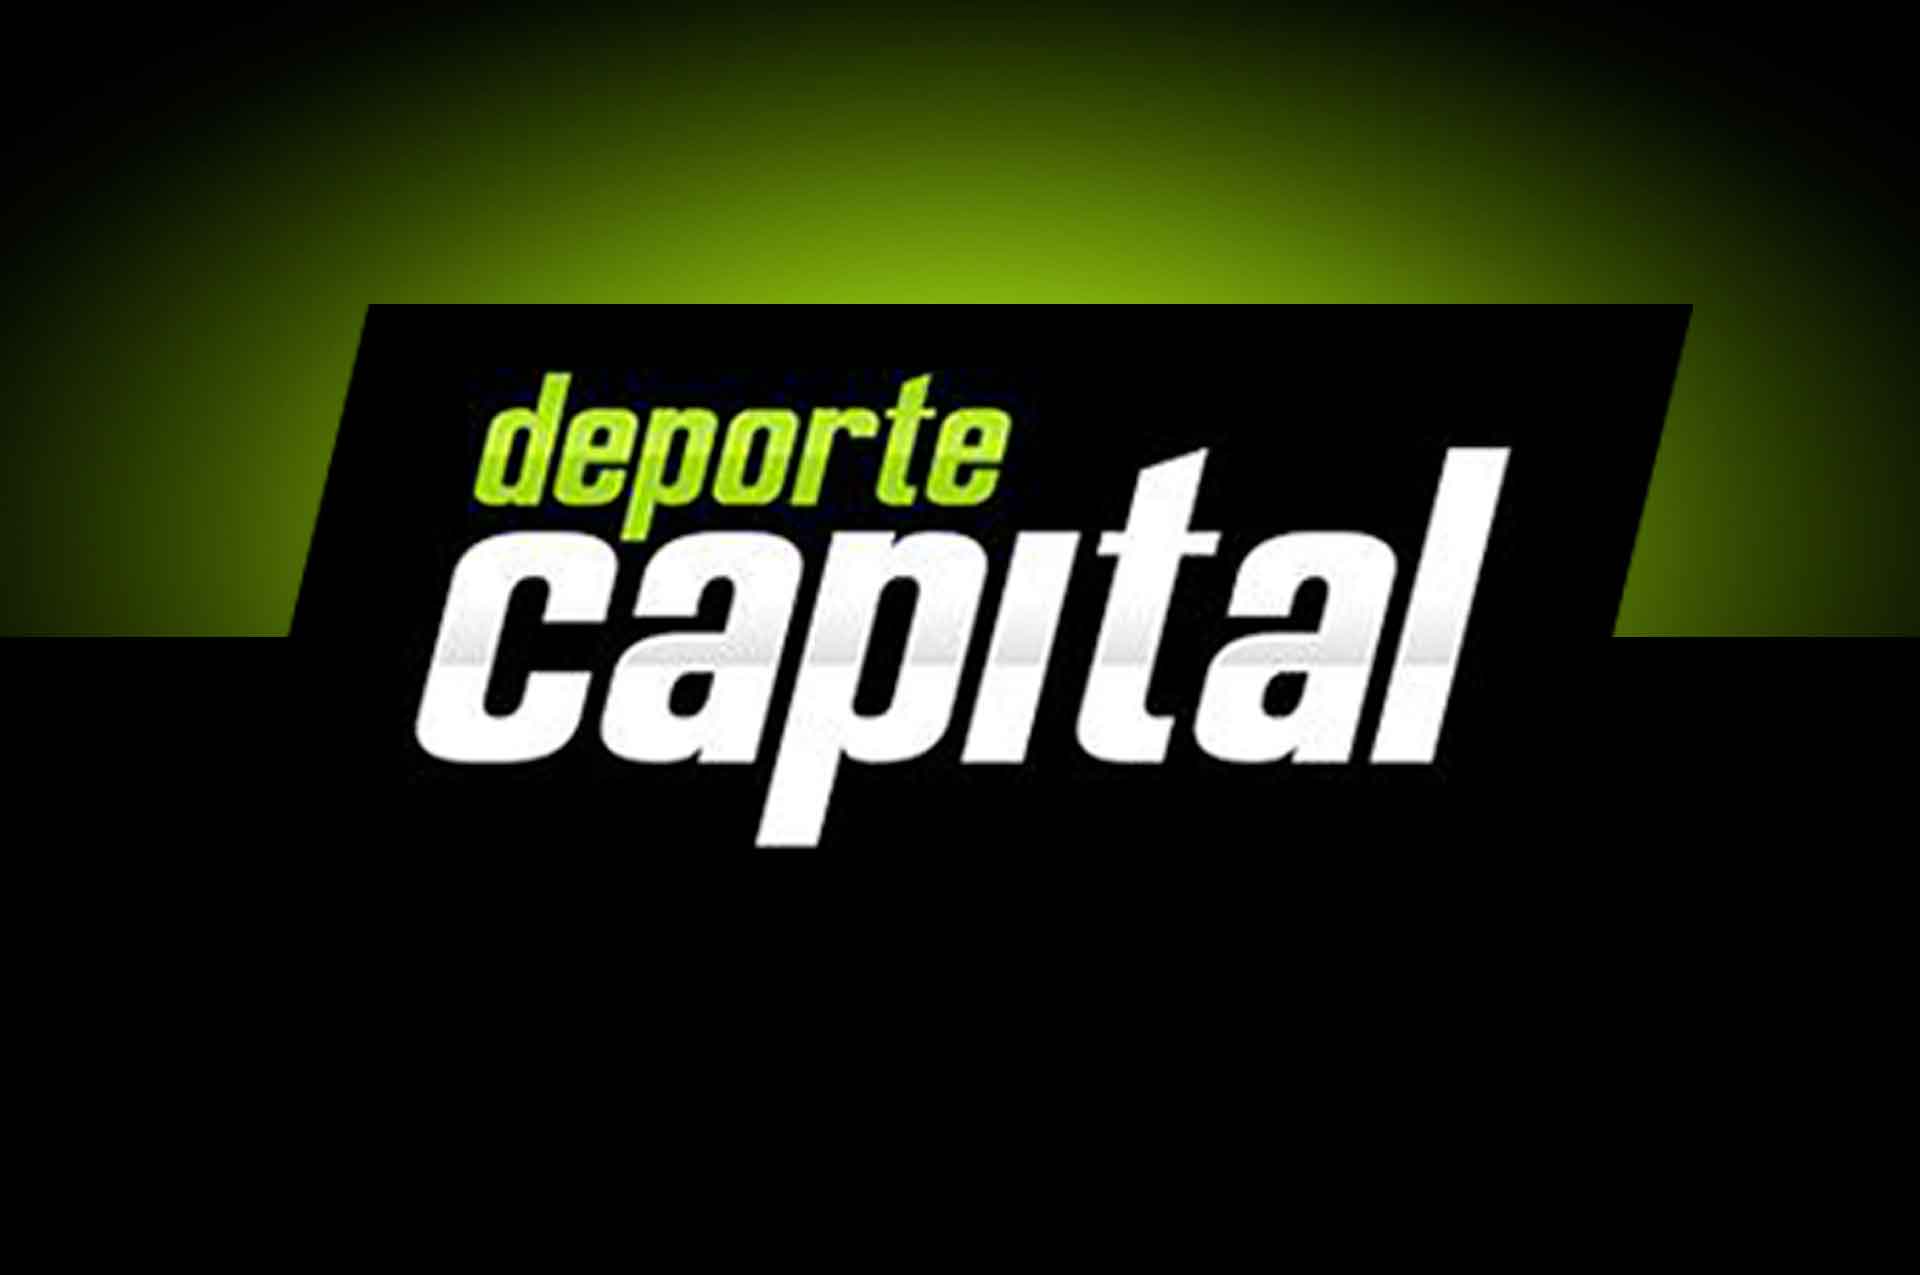 Deporte Capital